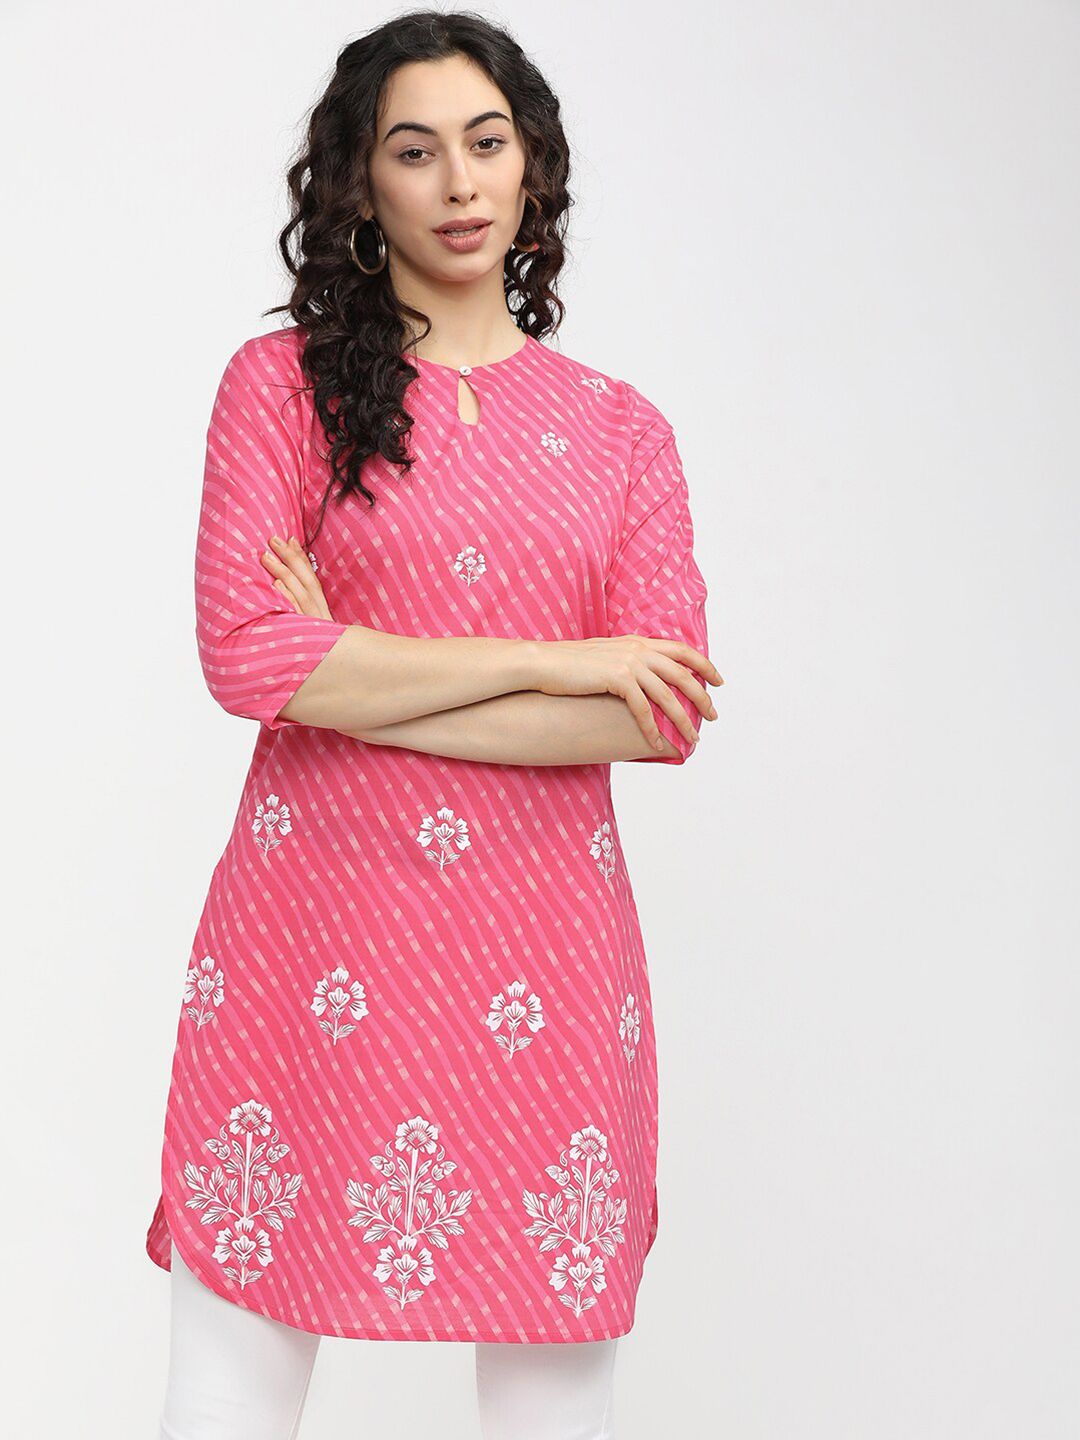 Vishudh Pink & White Printed Cotton Tunic Price in India